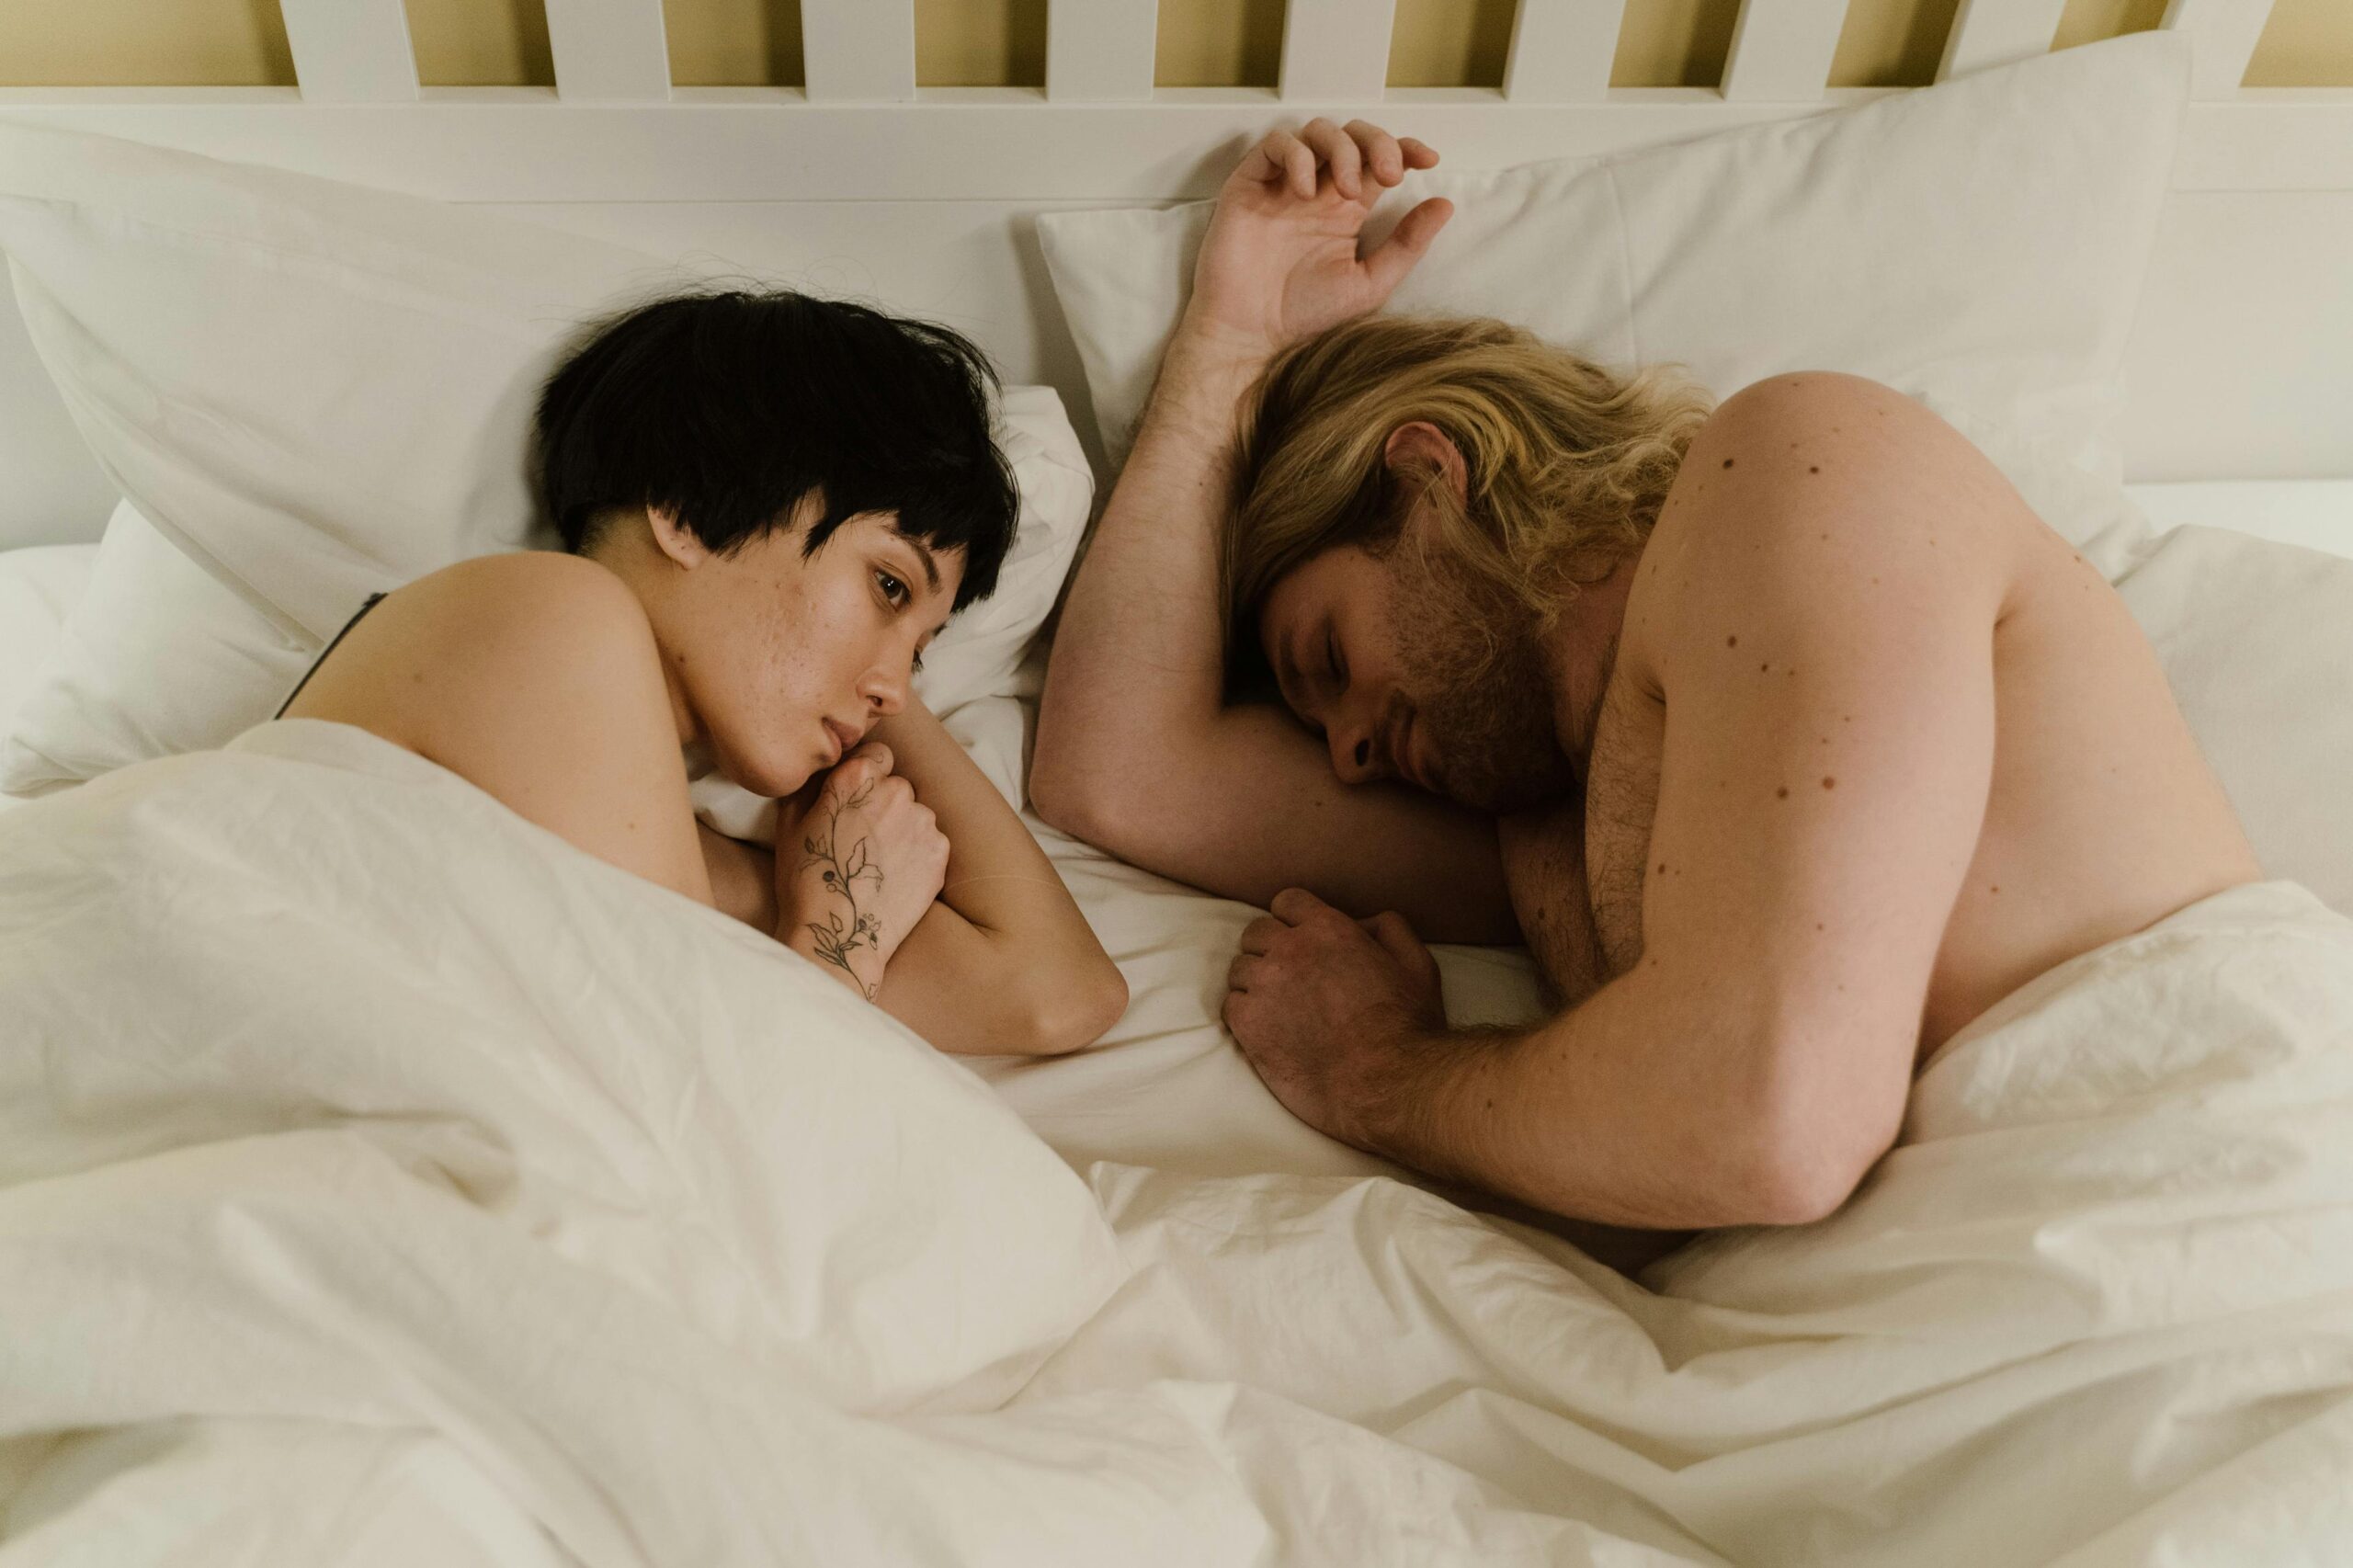 woman awake next to sleeping man